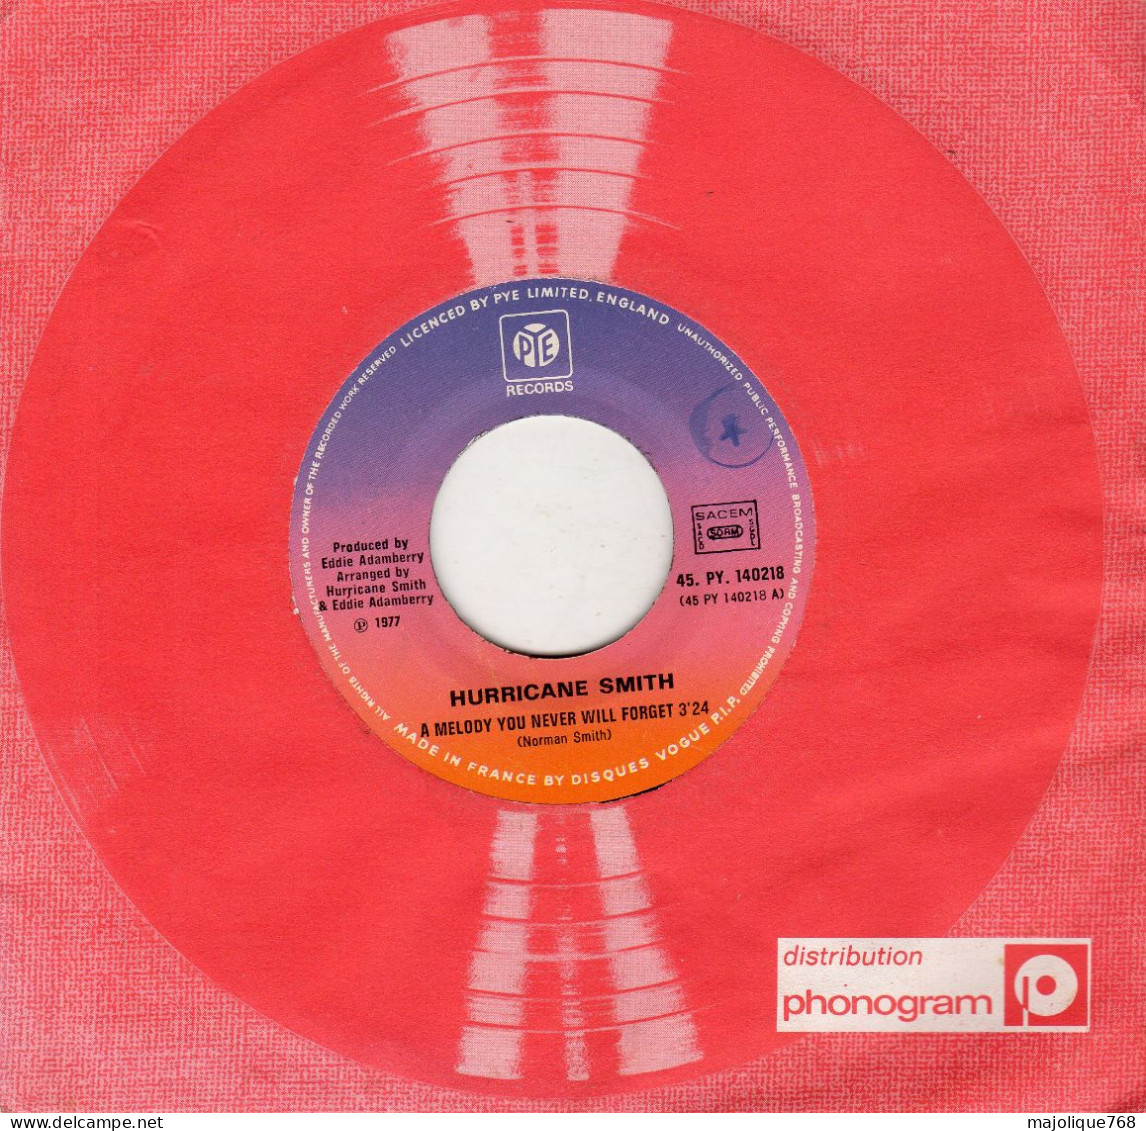 Disque De Hurricane Smith - A Melody You Never Wil Forget - PYE Records 140218 - France 1977 - Disco, Pop